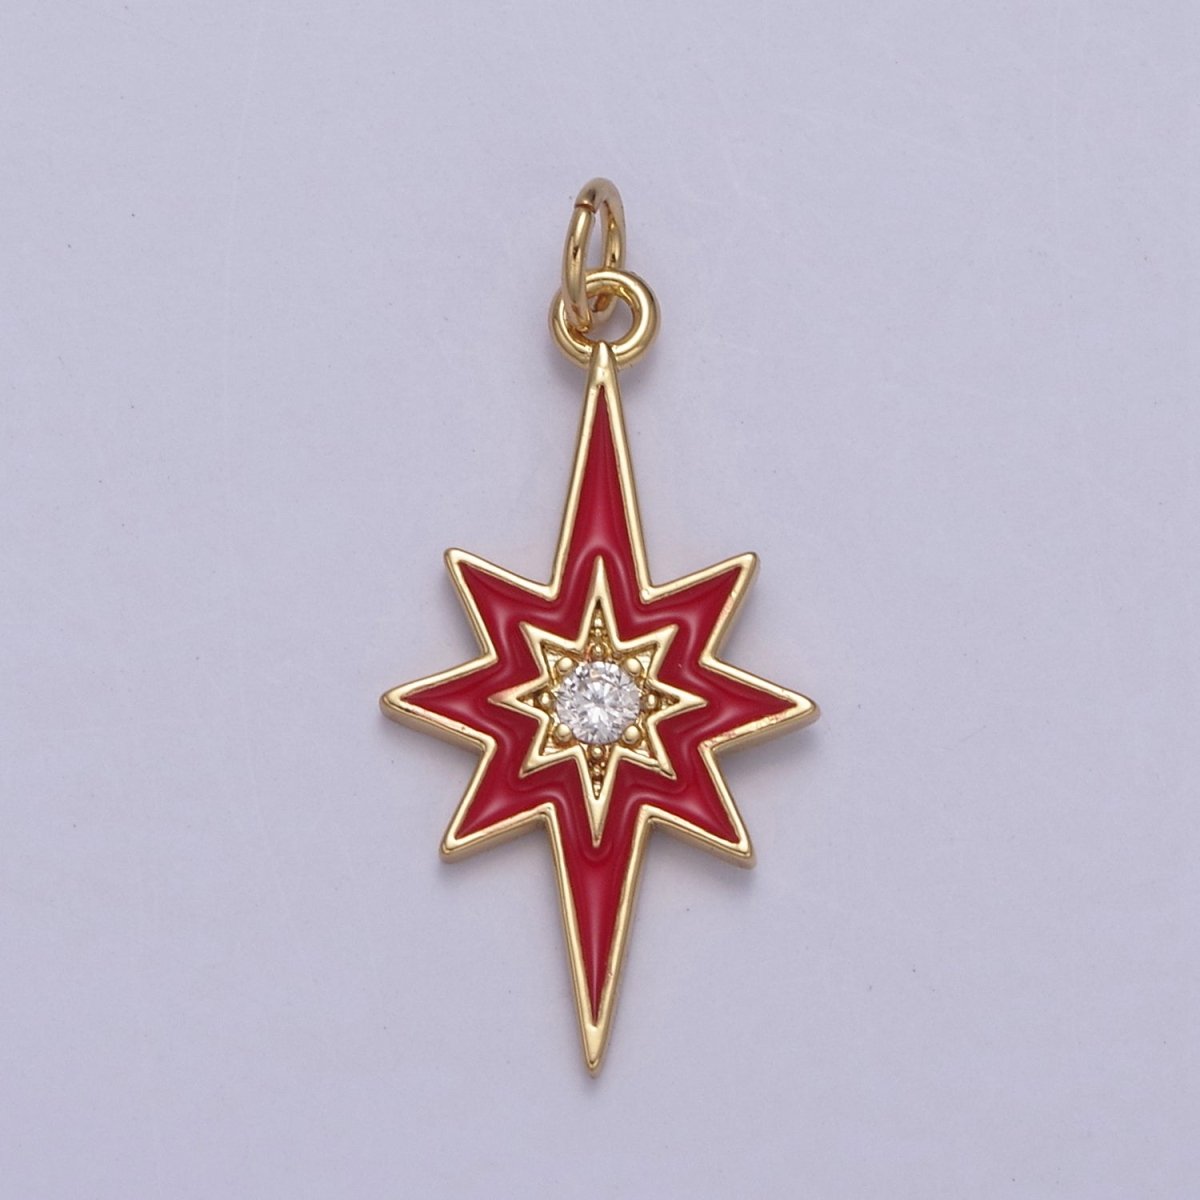 Colorful Enamel Star Charm 8 Point Star Starburst North Star Pendant - Gold Filled Statement Celestial Charm Pendant N-729 - N-735 - DLUXCA